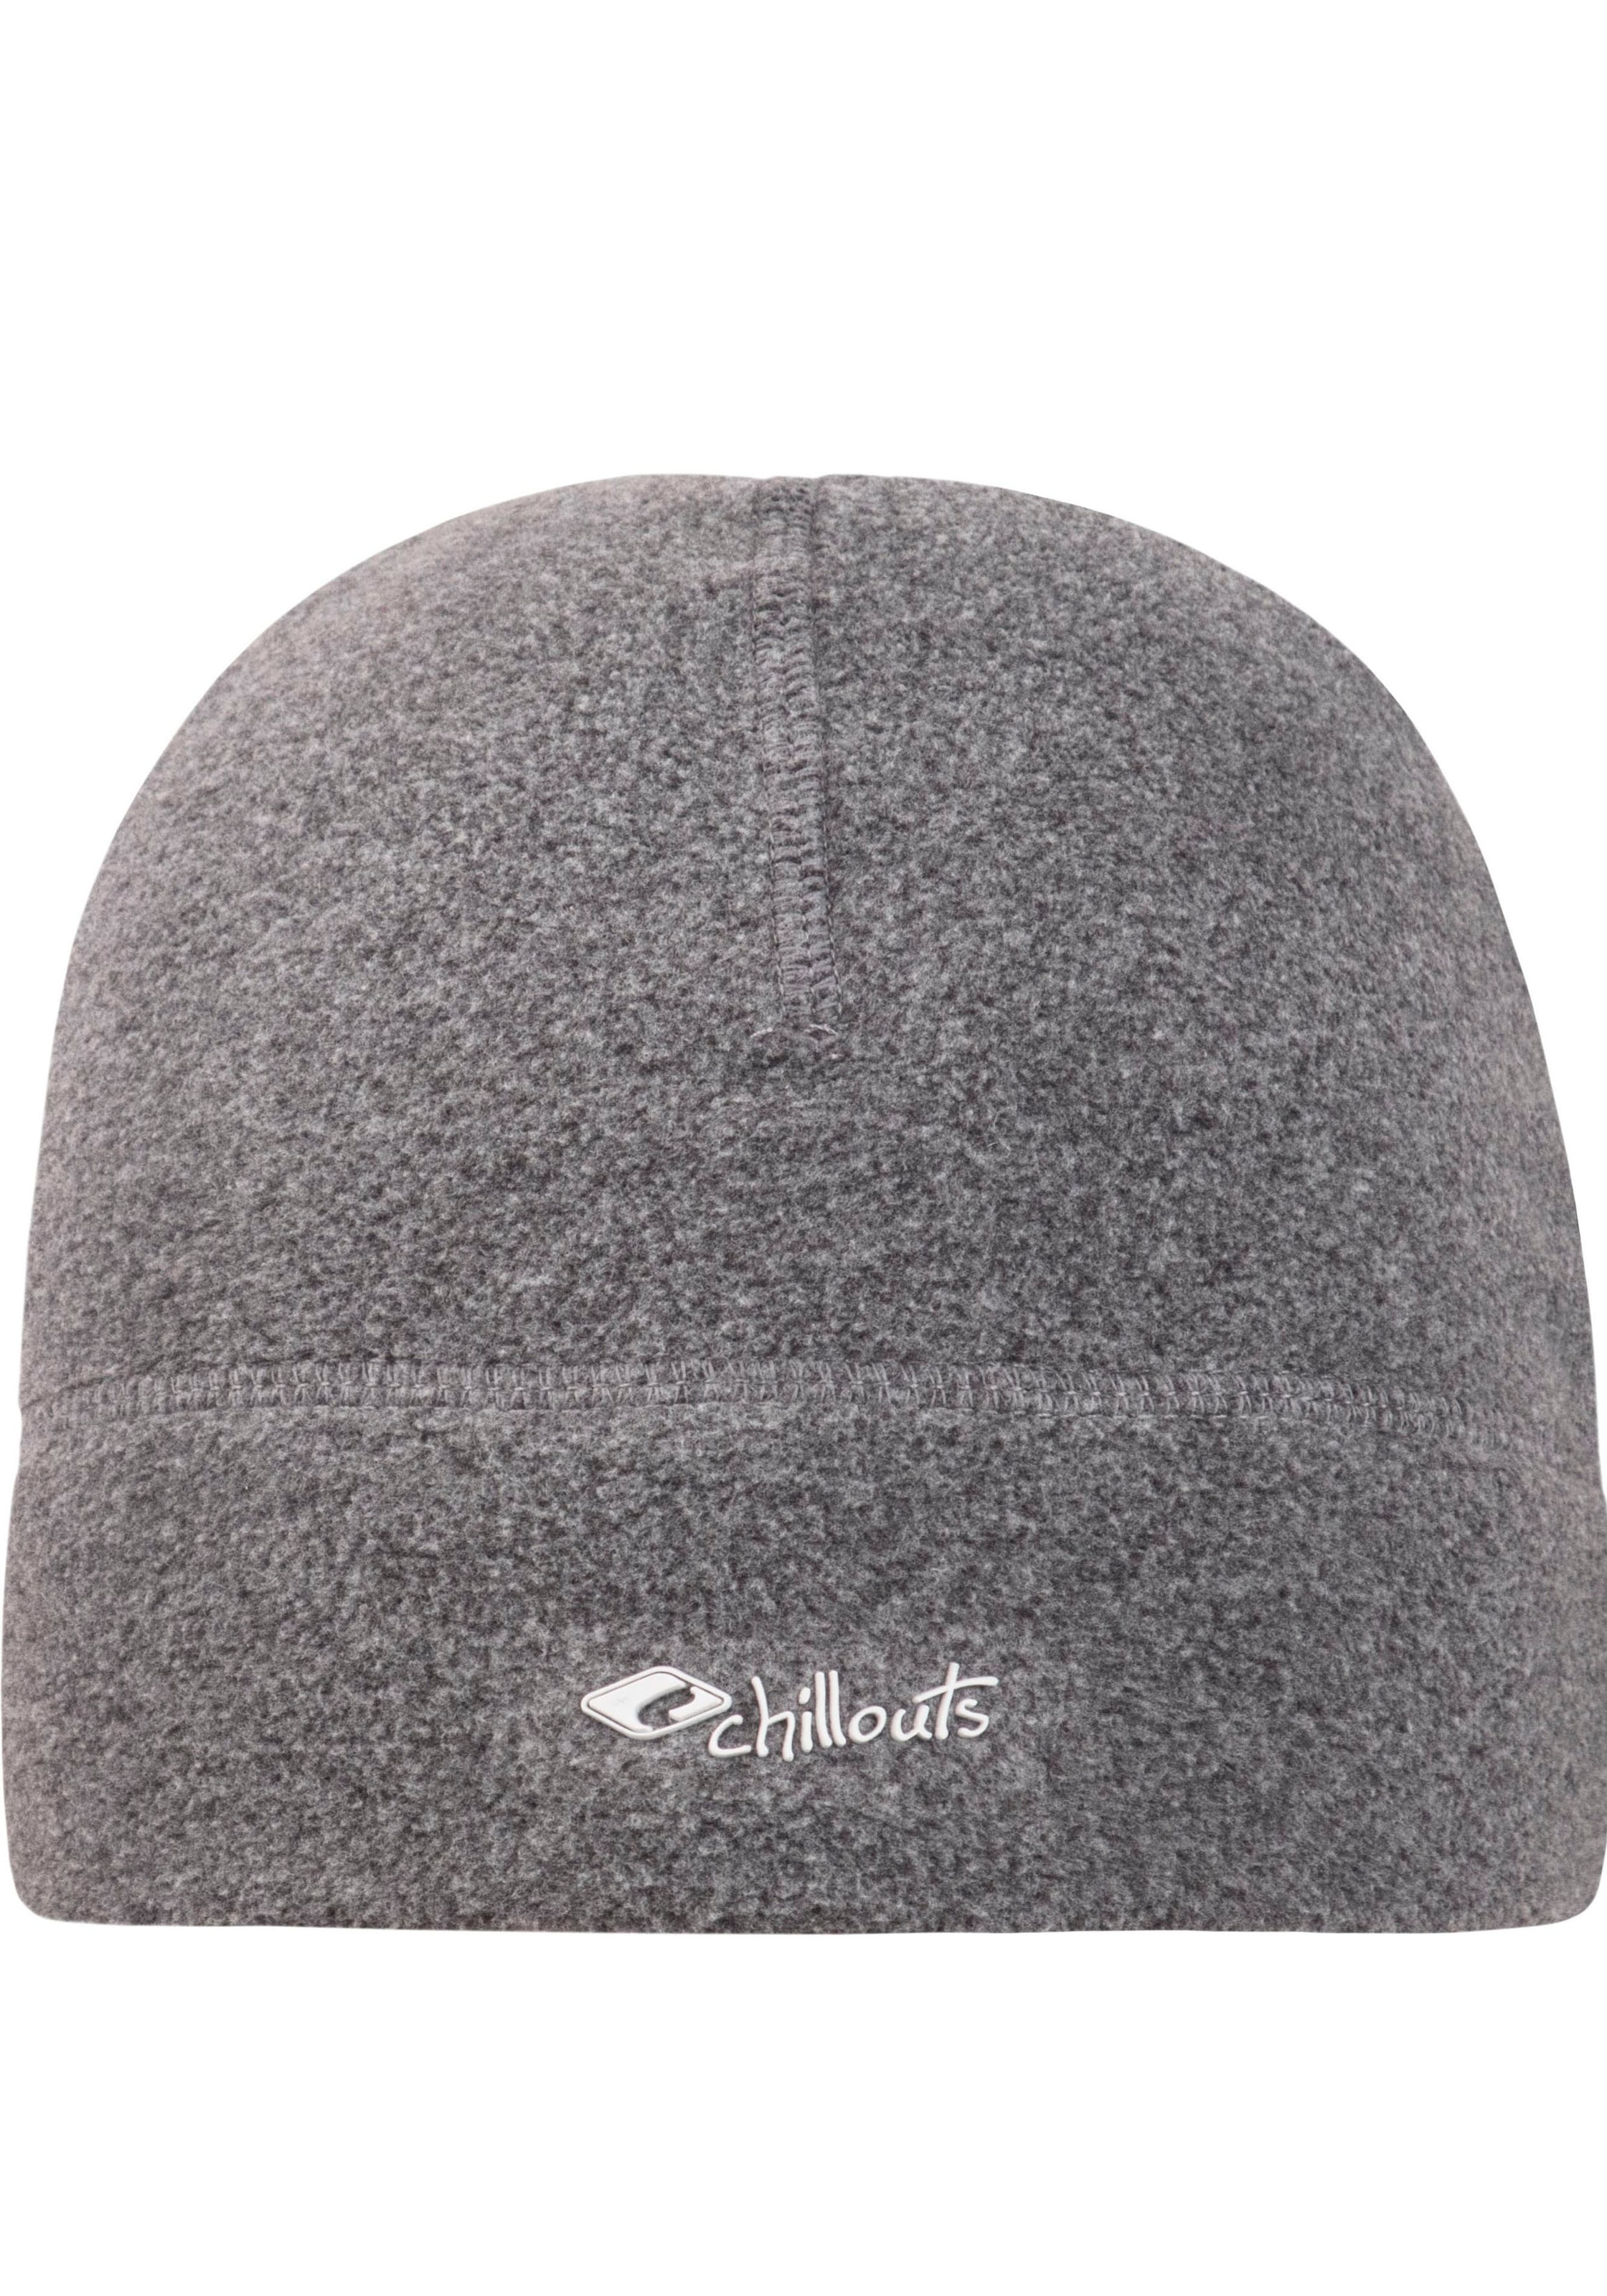 chillouts Fleecemütze »Freeze Fleece Hat« kaufen | UNIVERSAL